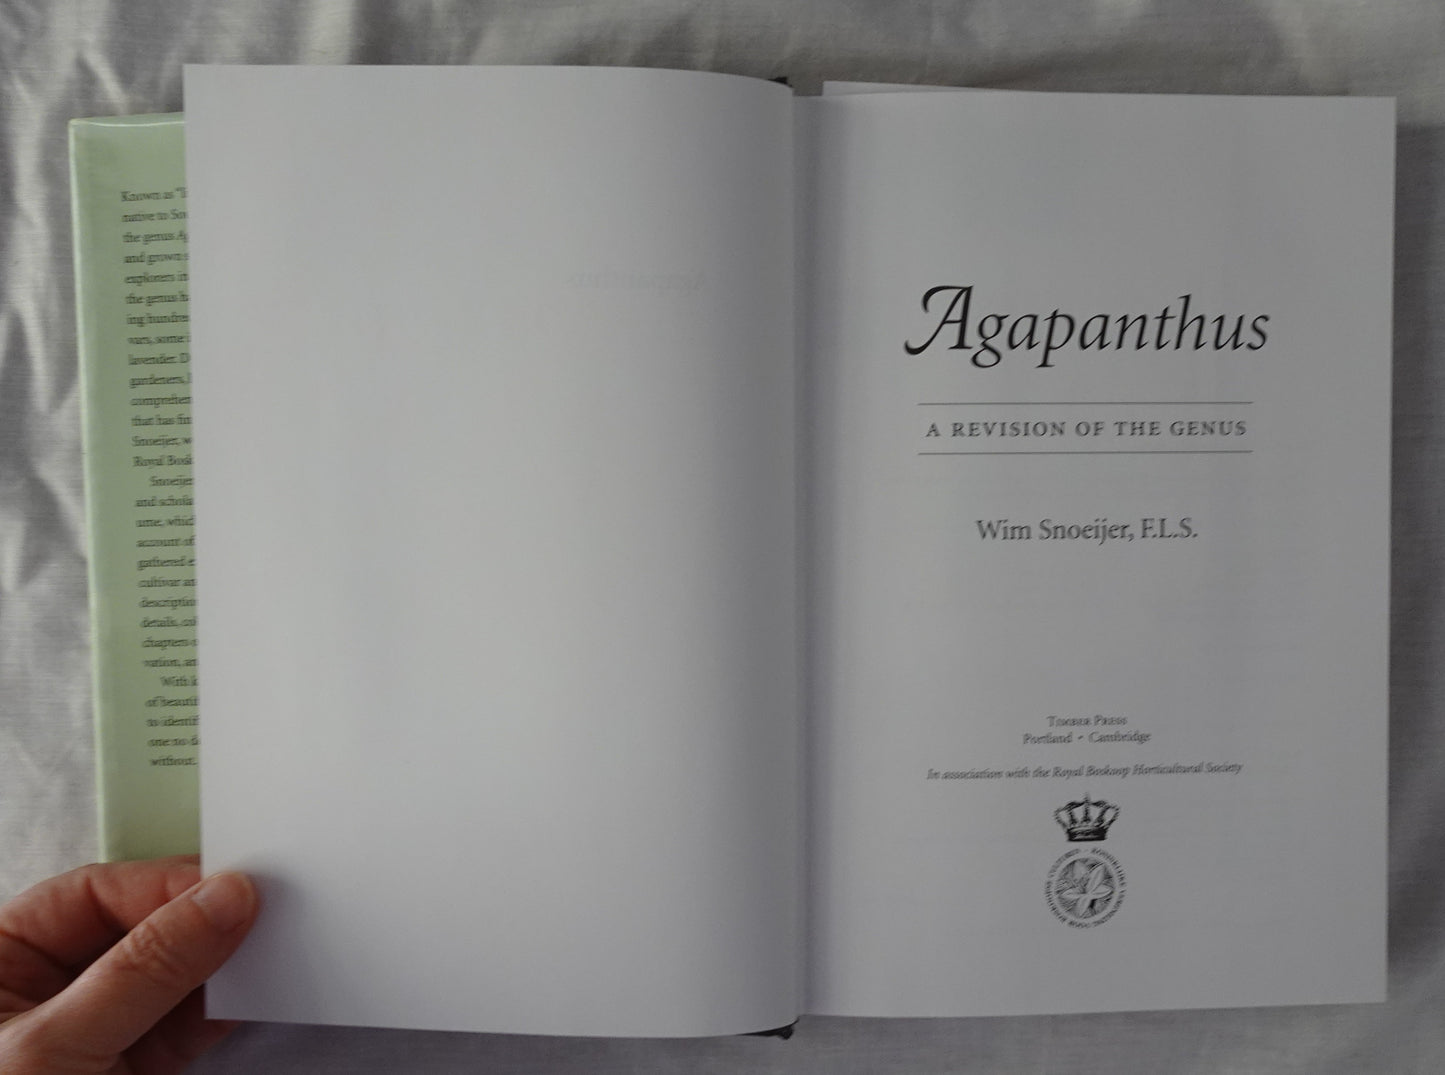 Agapanthus by Wim Snoeijer